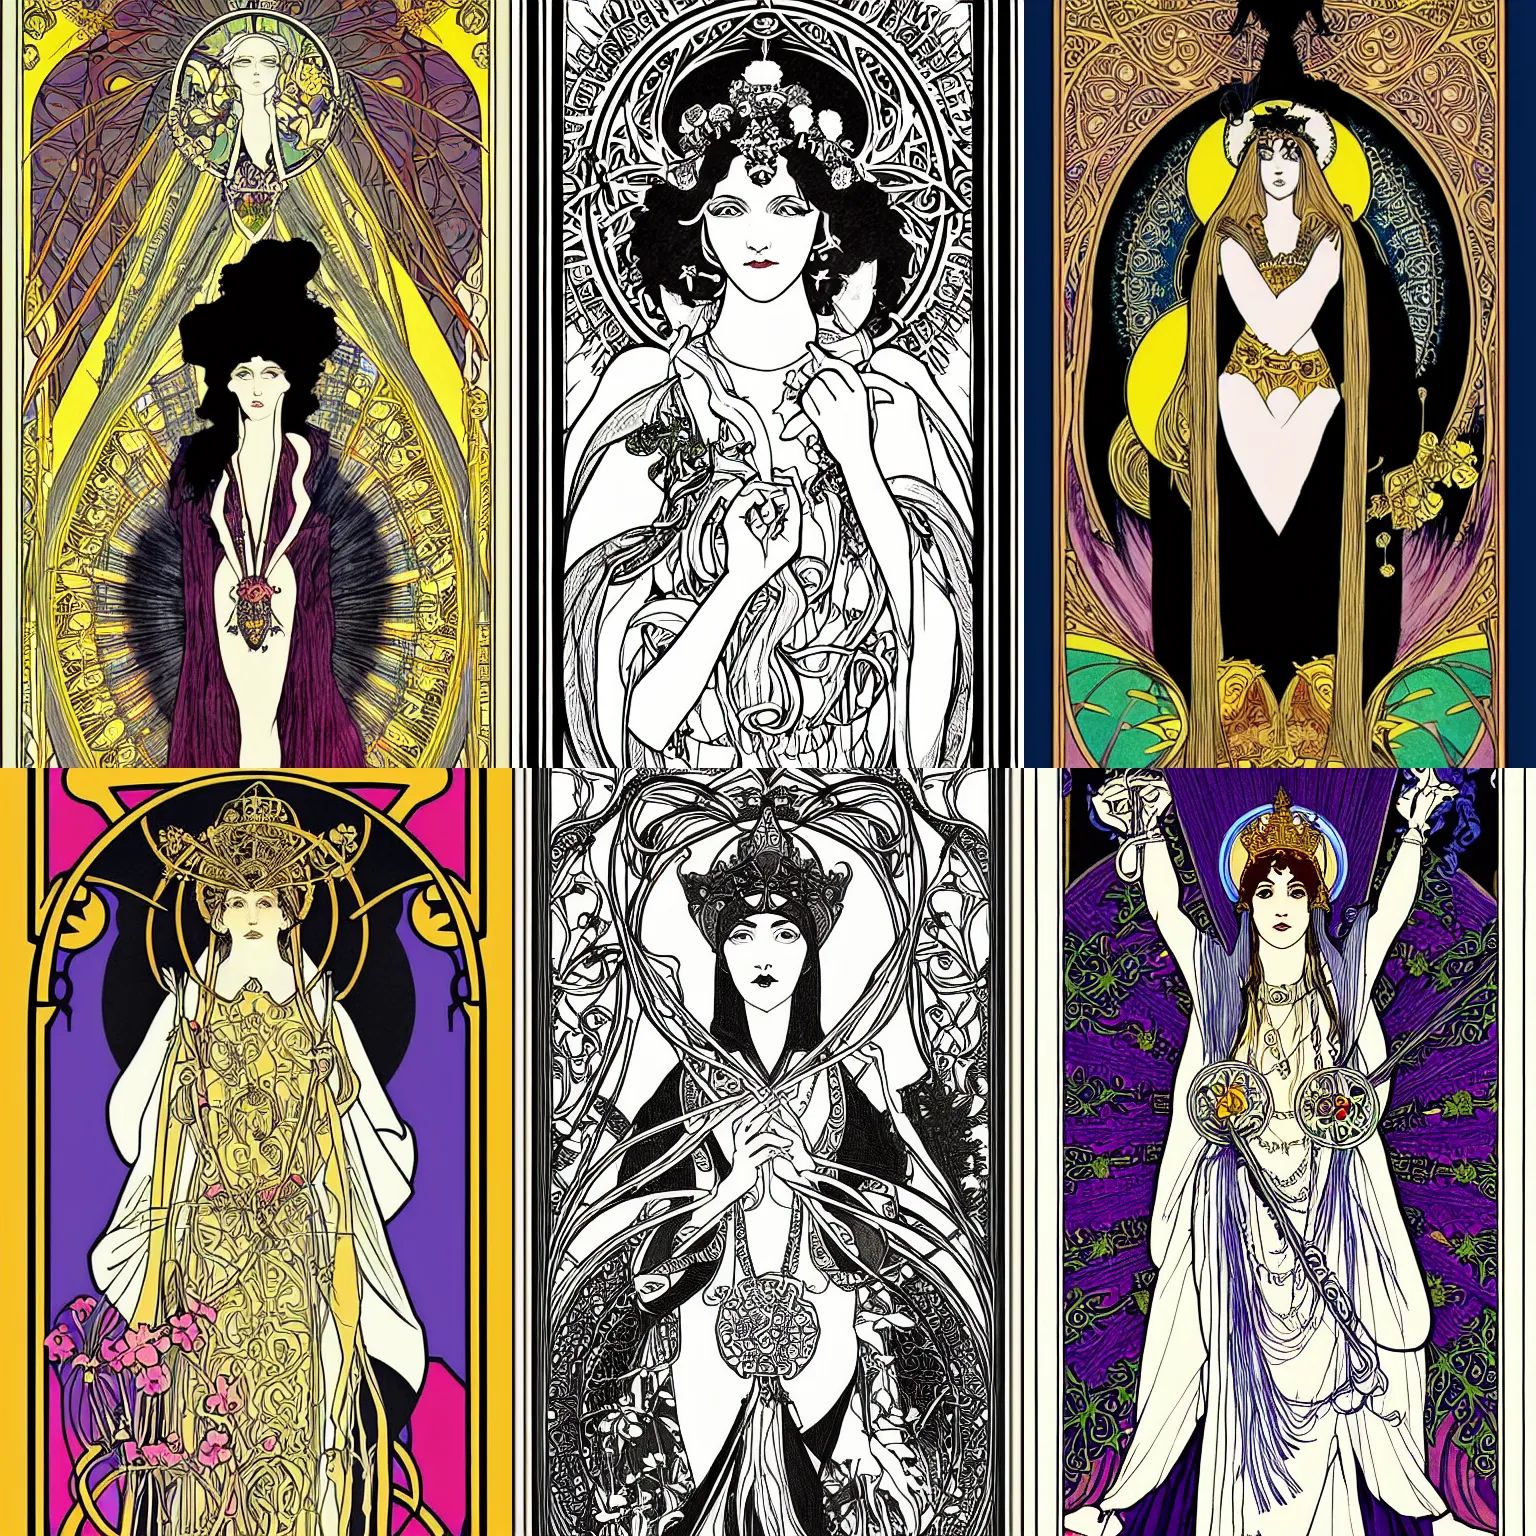 Prompt: High priestess tarot card, spiritual, 4k digital illustration by Aubrey Beardsley in the style of Alphonse Mucha, colorful, Tarot Card, occult, iconography, intricate border designs, Artstation